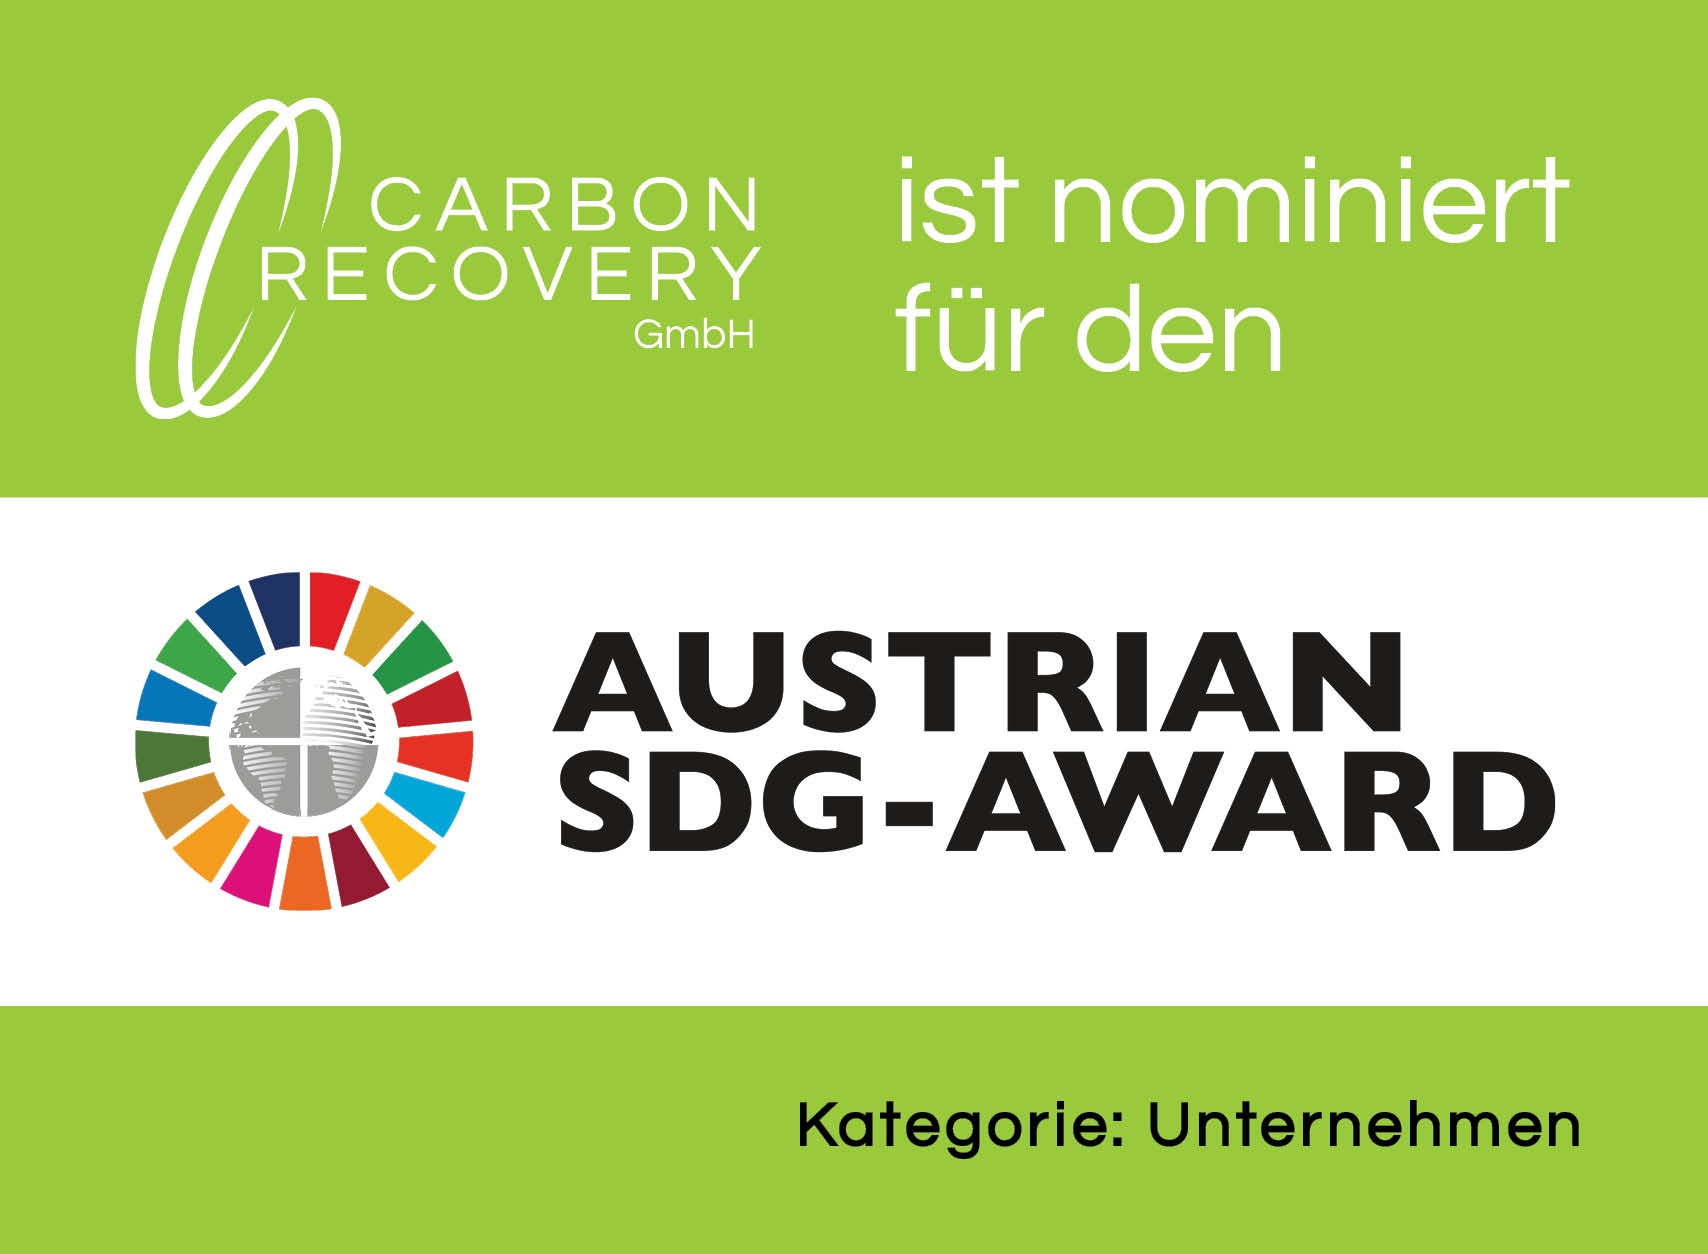 AUSTRIAN SDG Award